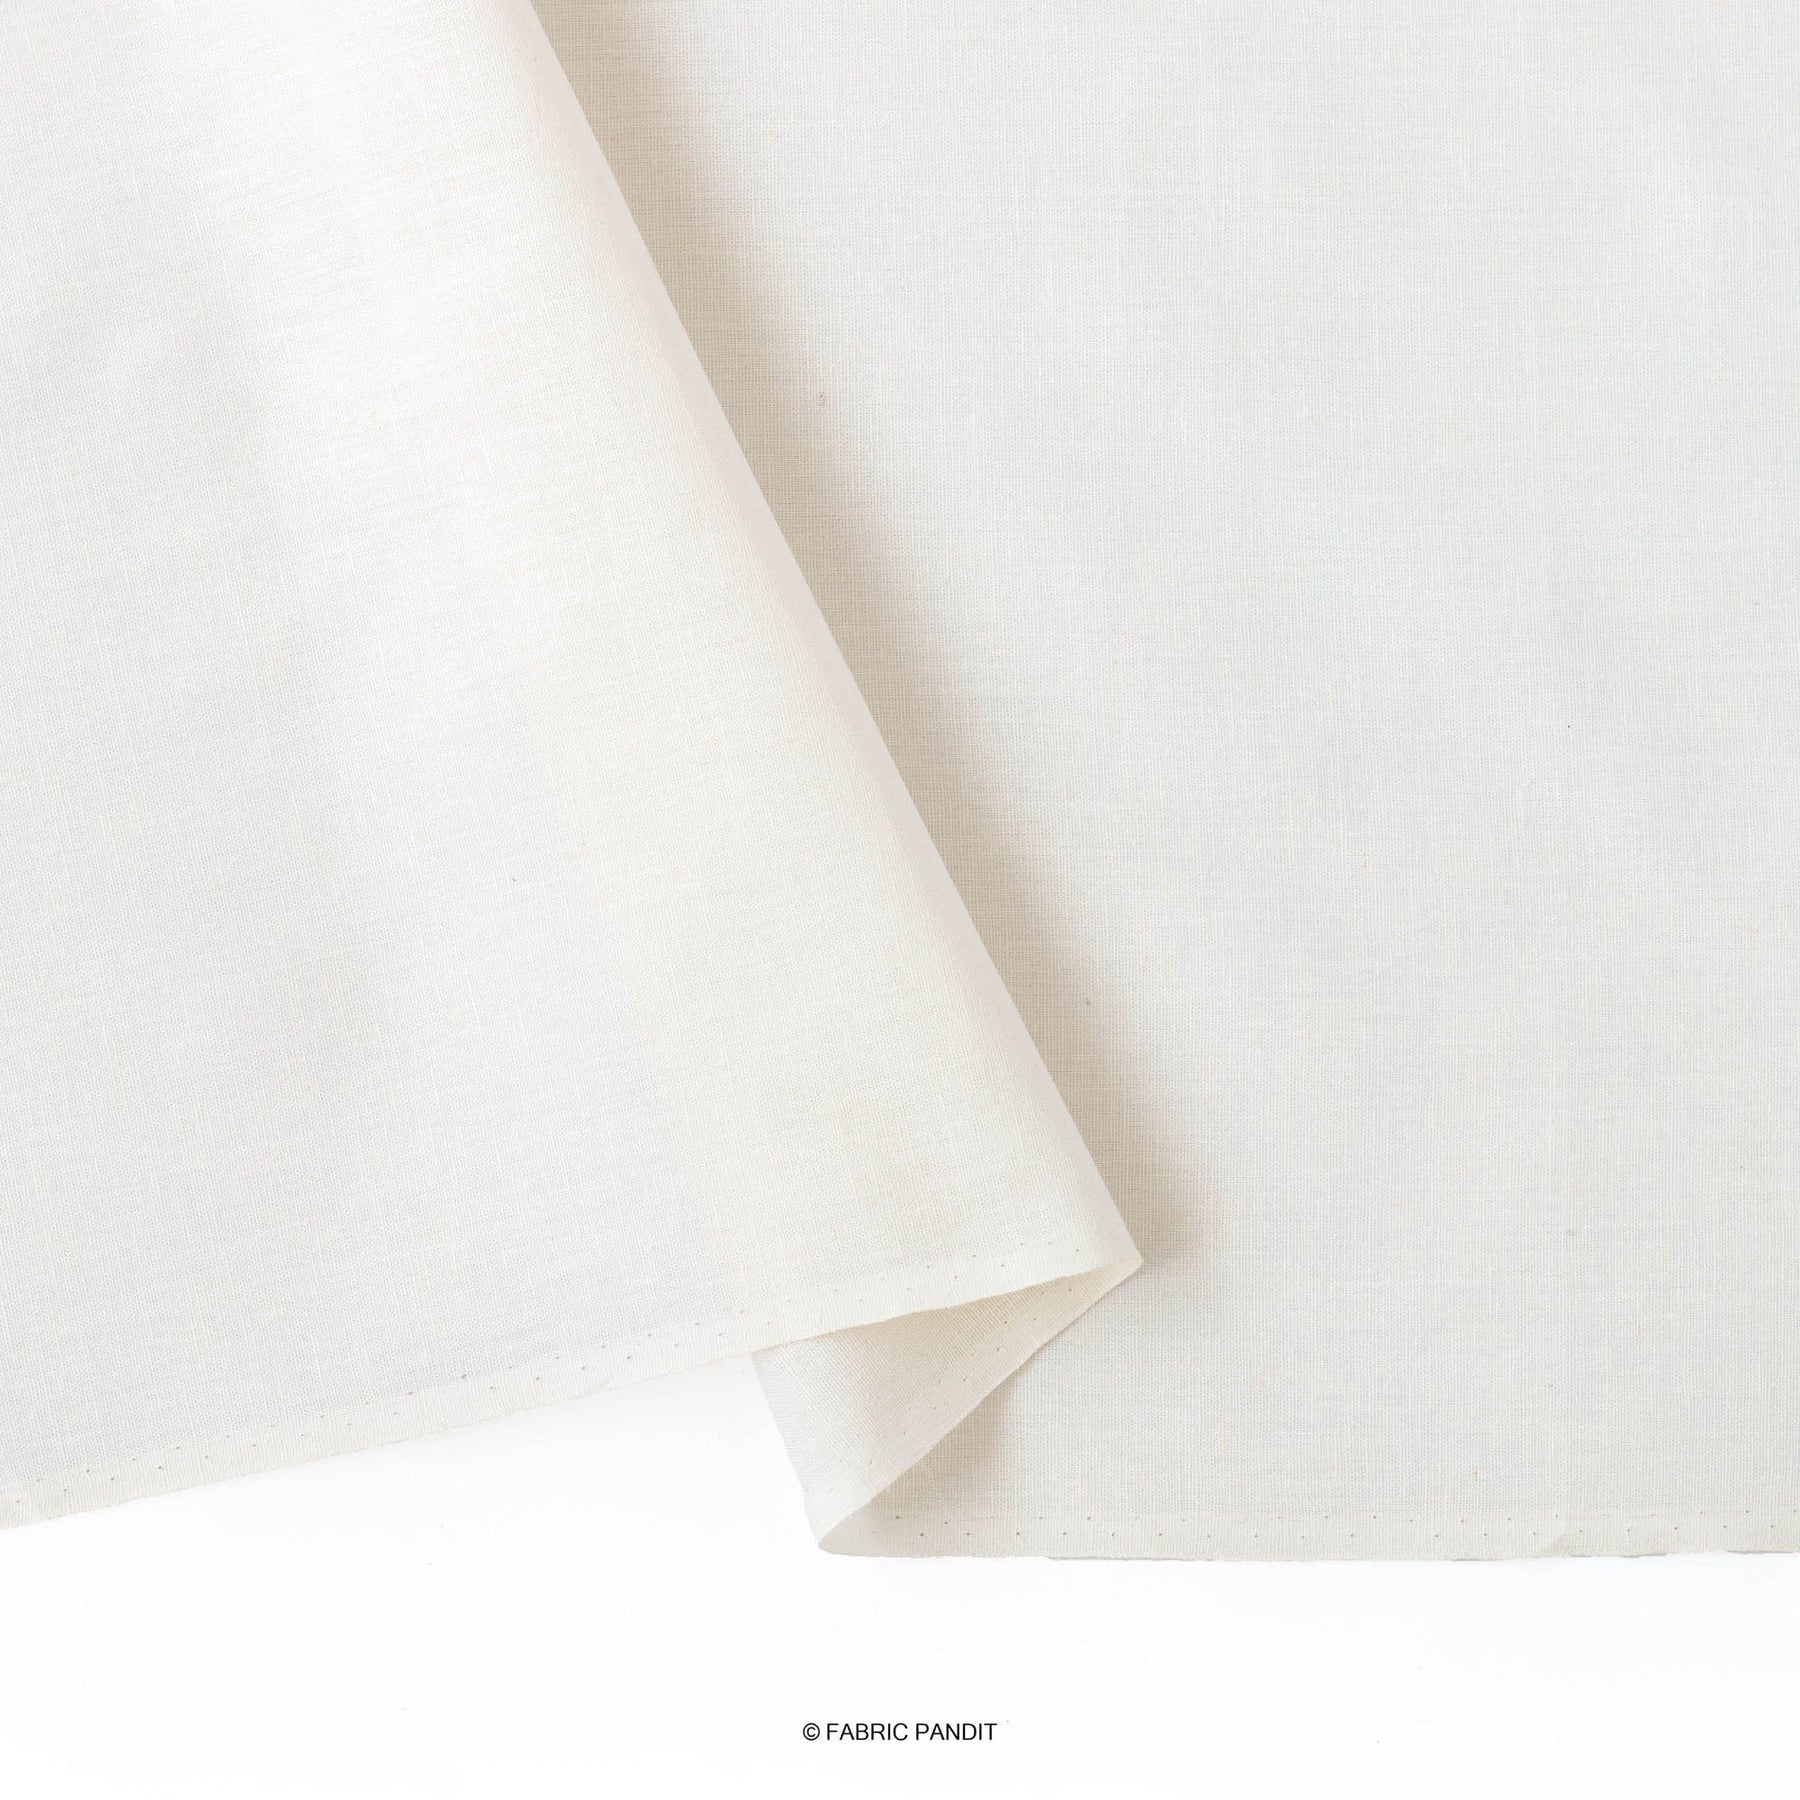 China Linen Kurti Free Size Latest Designed, High Quality linen Fabric,  Exclusive, Fashionable, Stylish and Comfortable, Kurtis for Women (1 pcs)